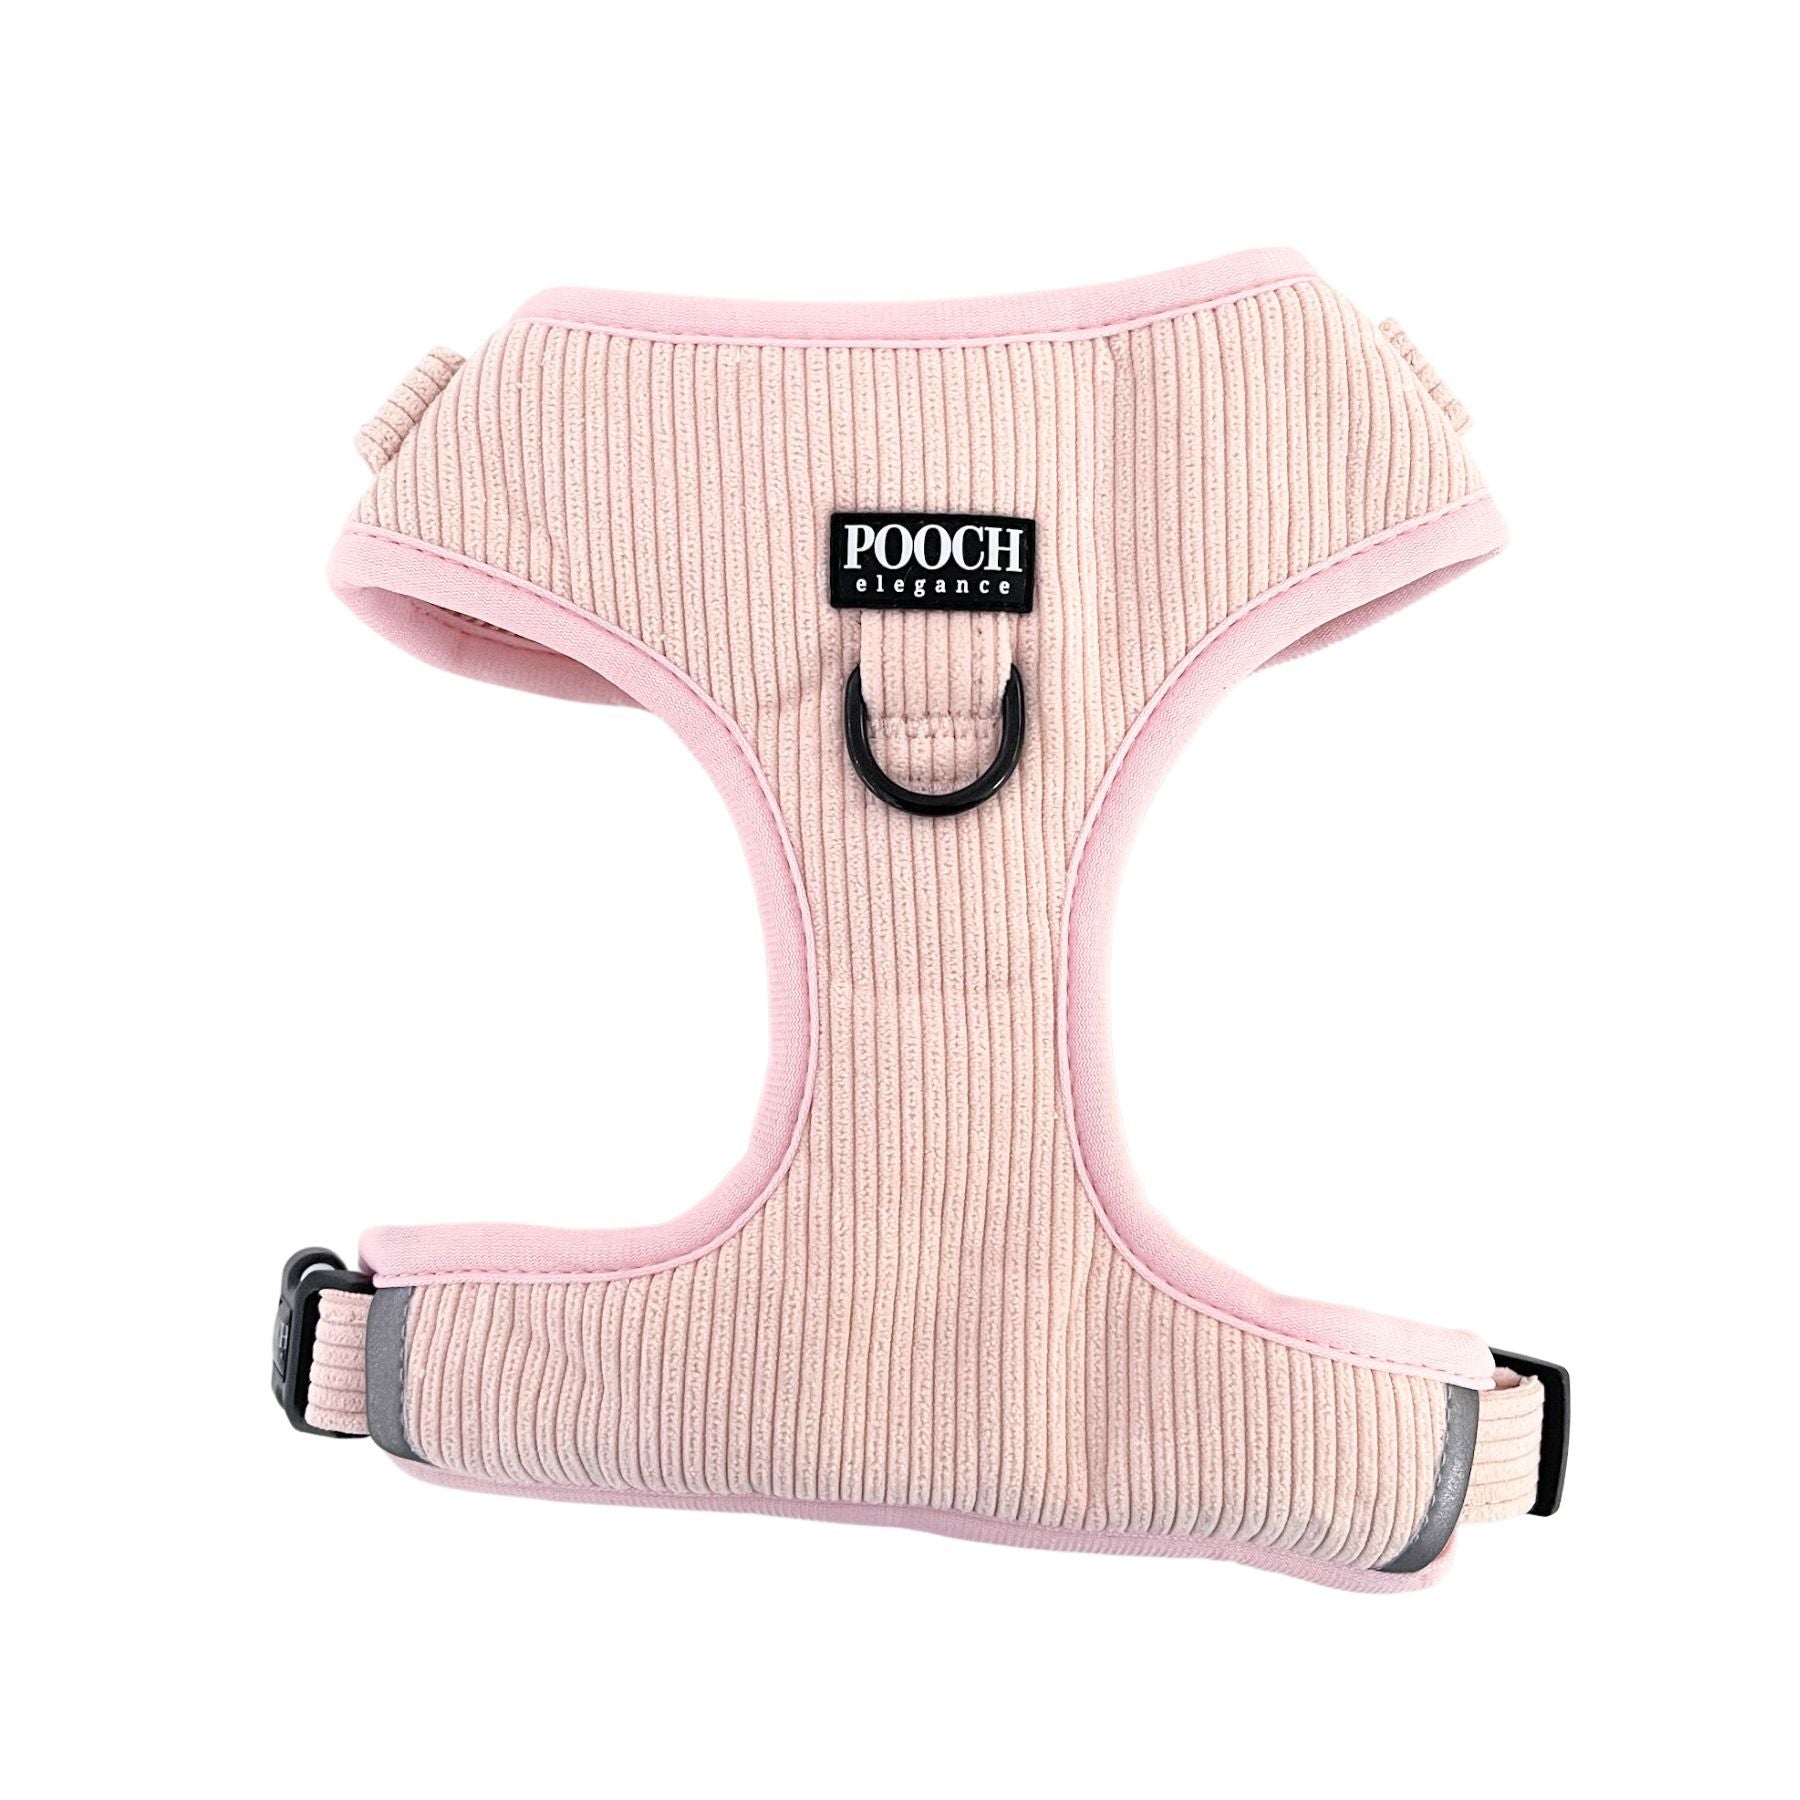 Corduroy Adjustable Harness - Powdered Pink